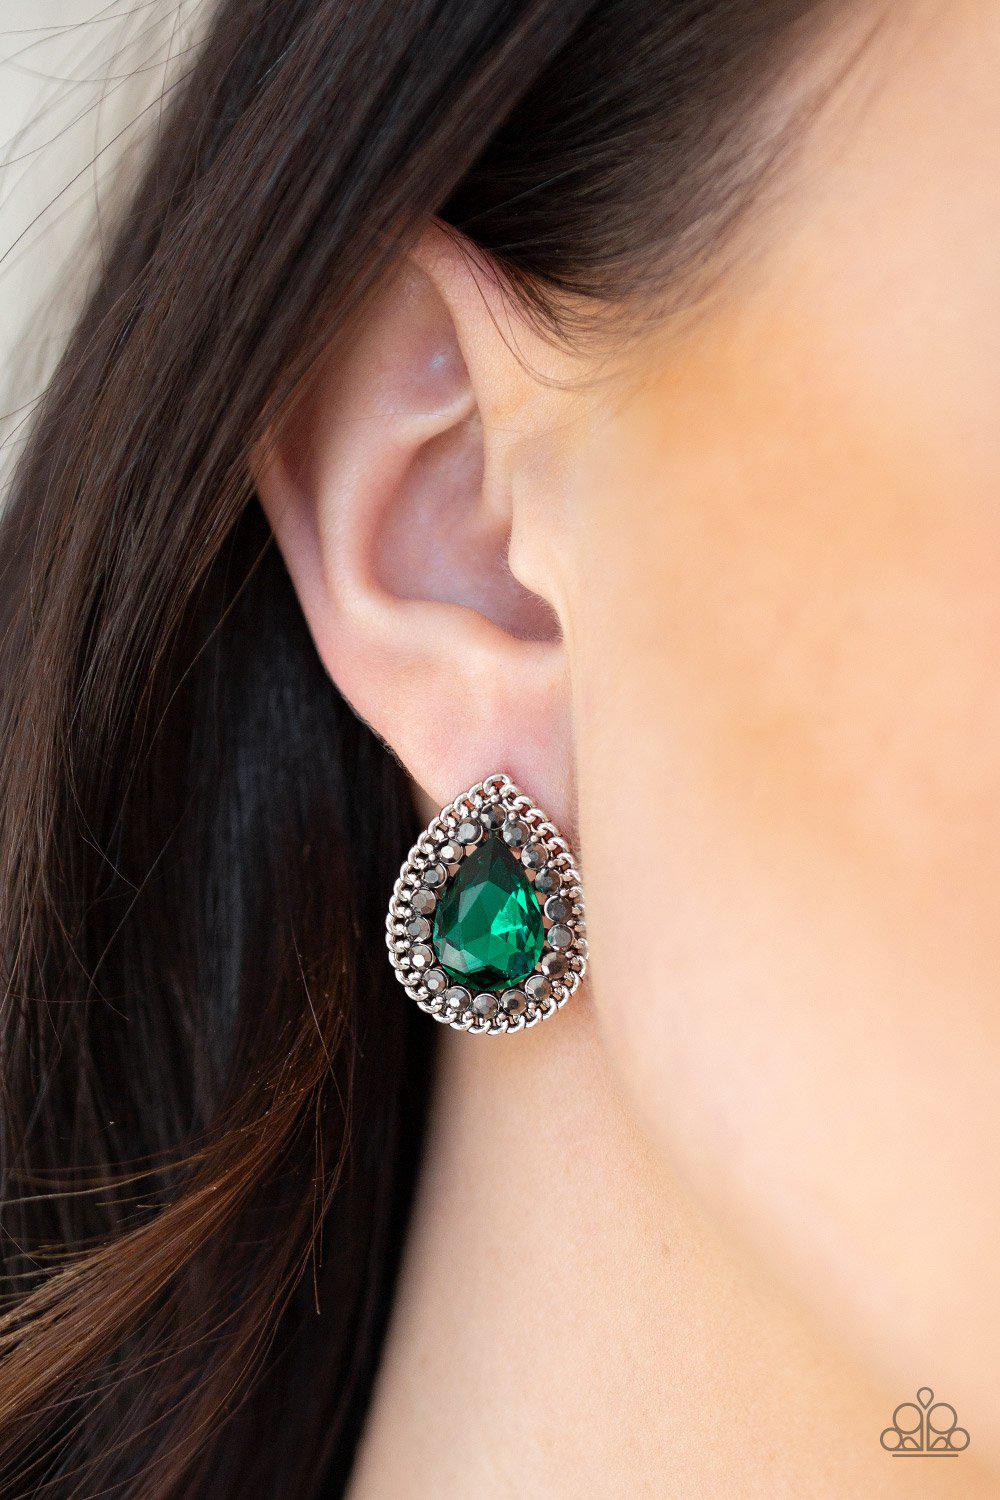 Debutante Debut Emerald Green Teardrop Post Earrings - Paparazzi Accessories - model -CarasShop.com - $5 Jewelry by Cara Jewels